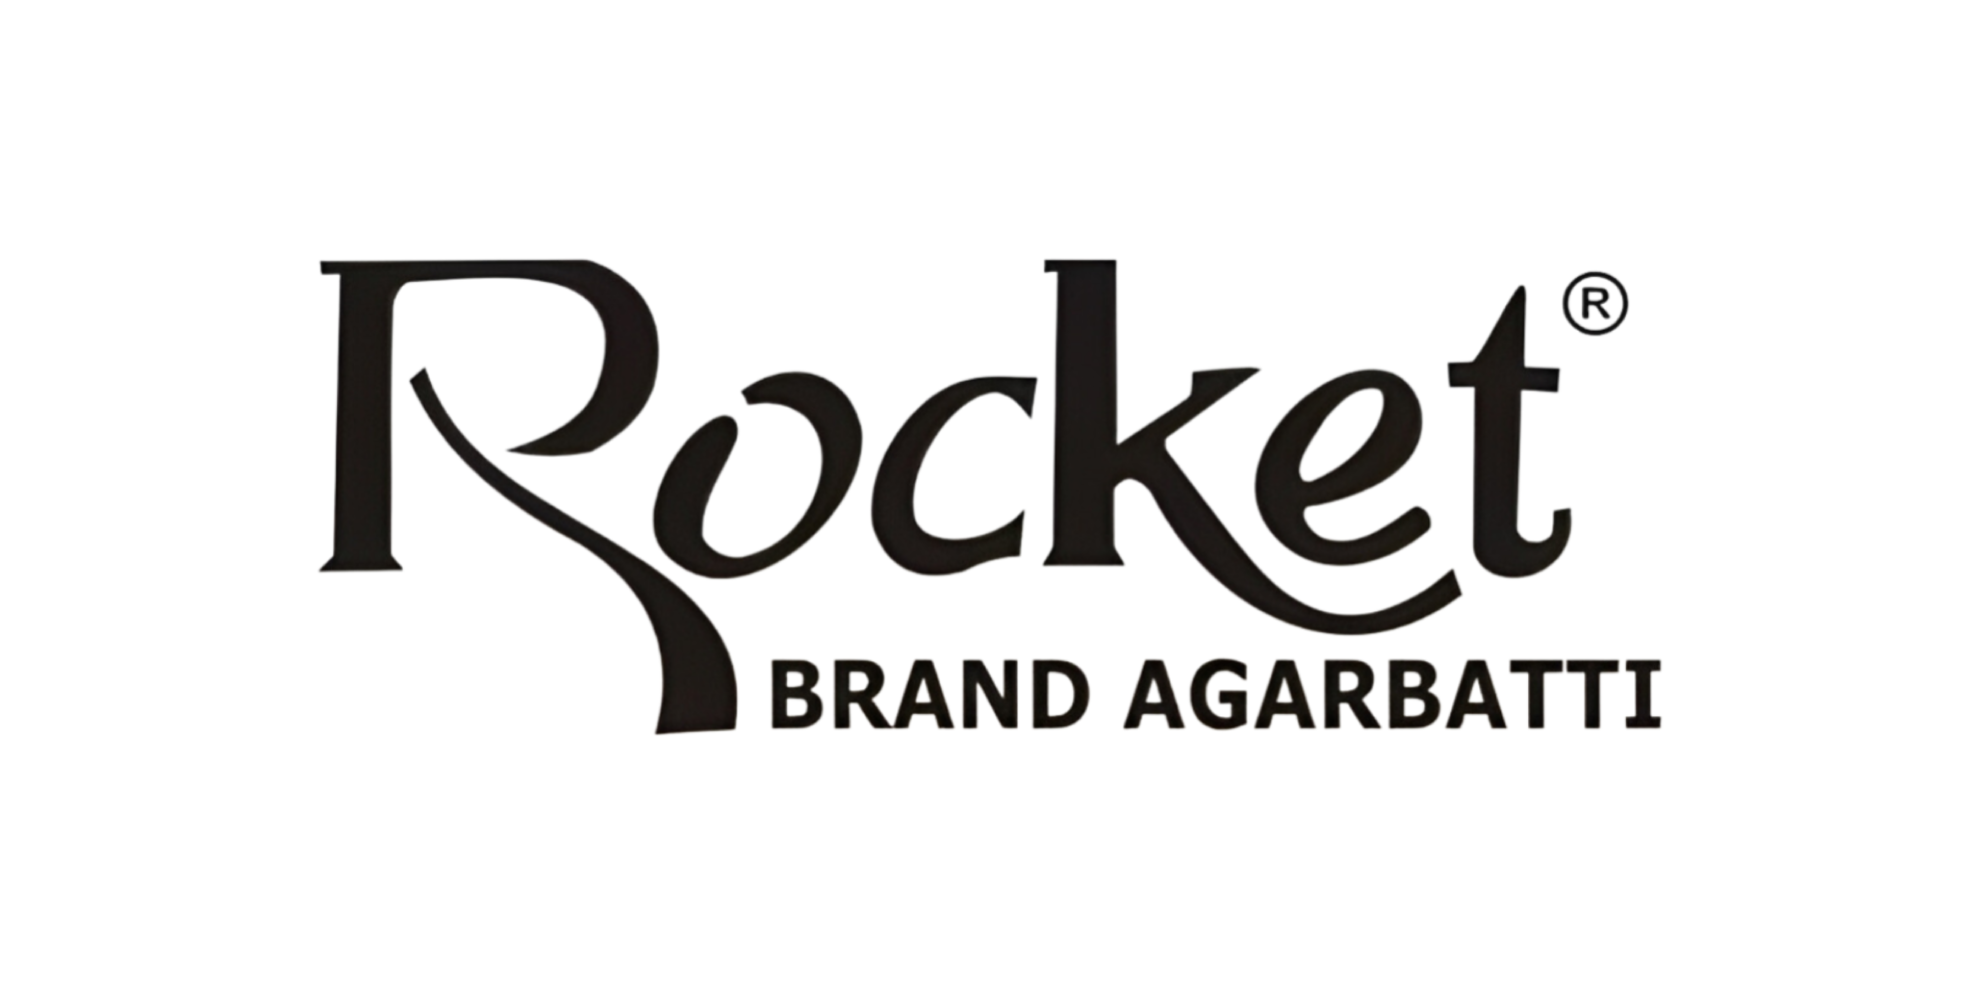 Rocket Agarbatti